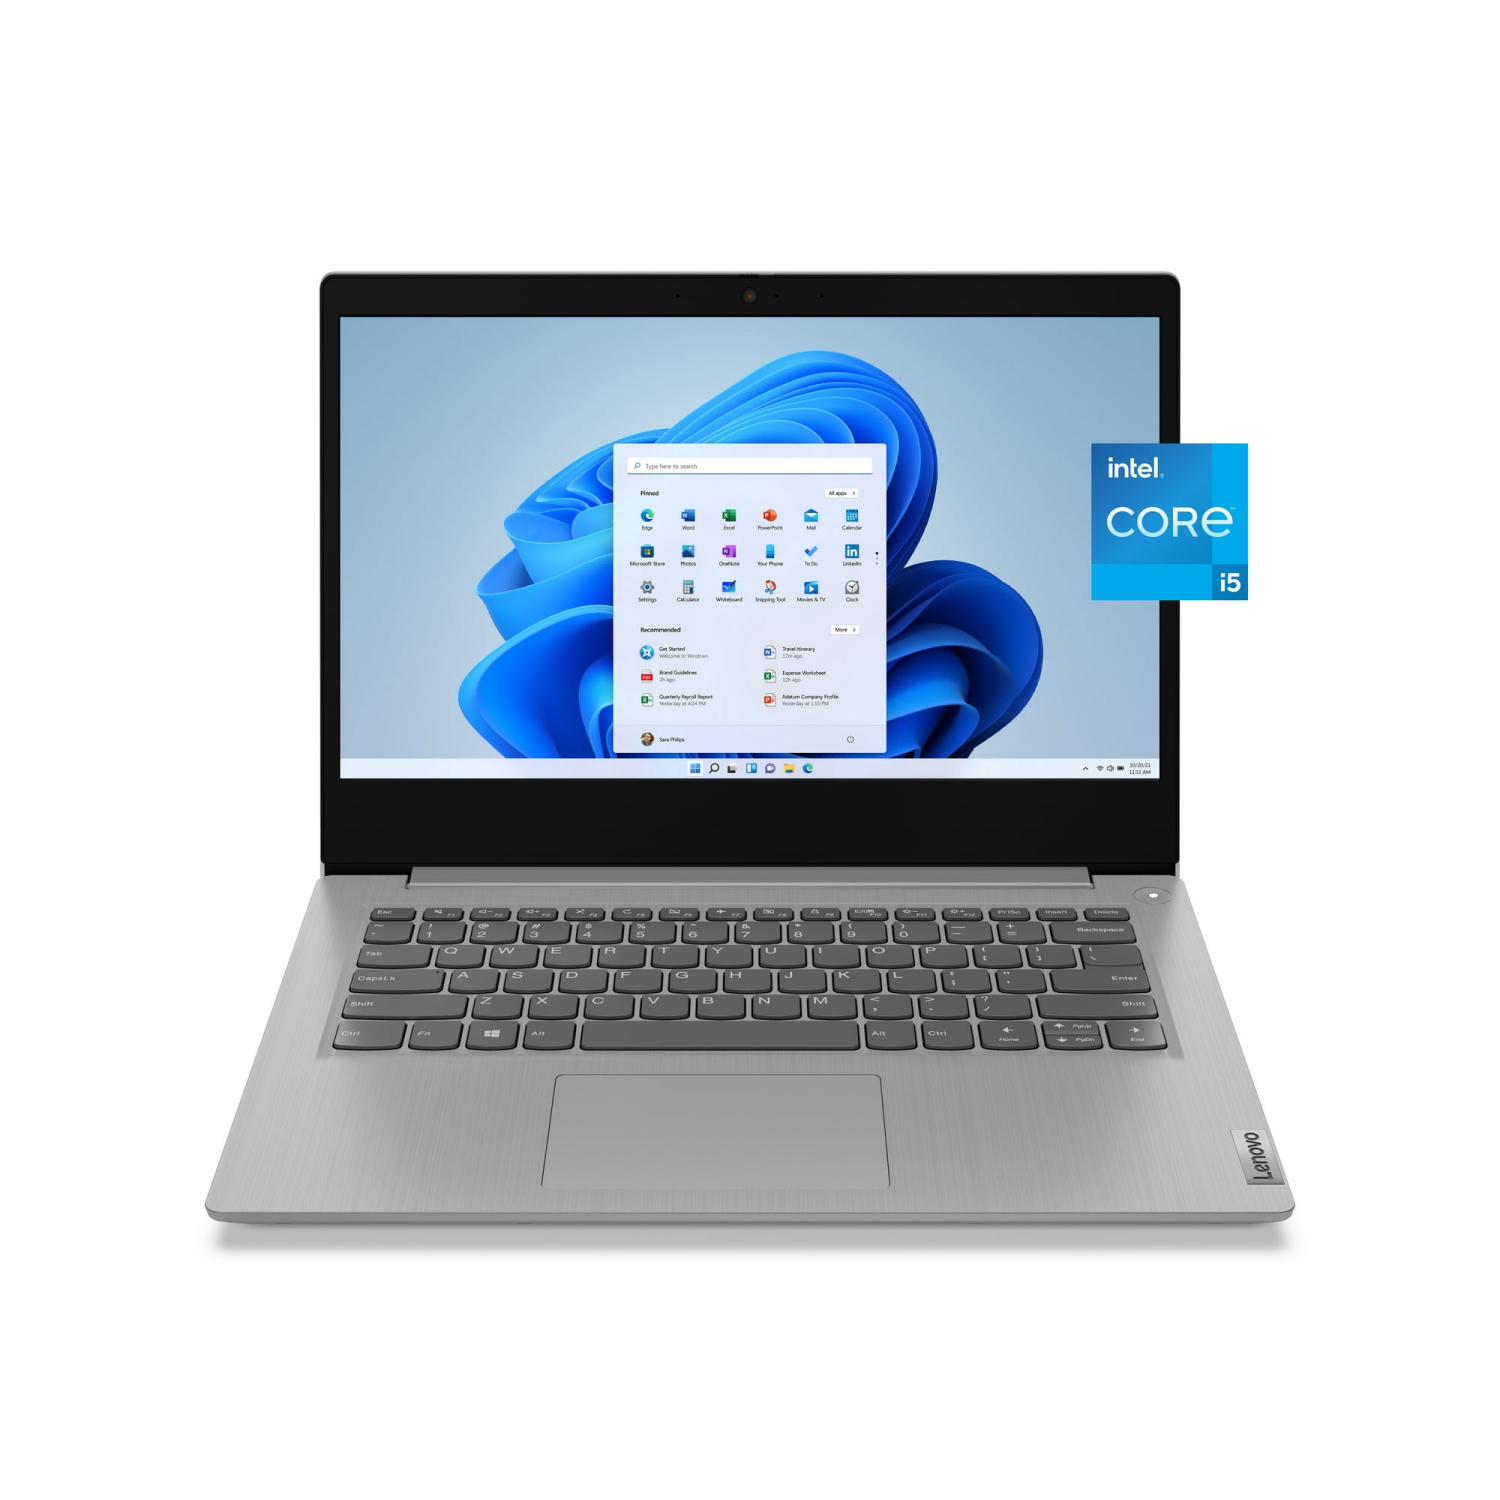 Lenovo Ideapad 3 14" FHD Laptop (Intel Core i5-1135G7, 8GB RAM, 256GB SSD, Windows 11) - Platinum Grey (81X700FVUS)